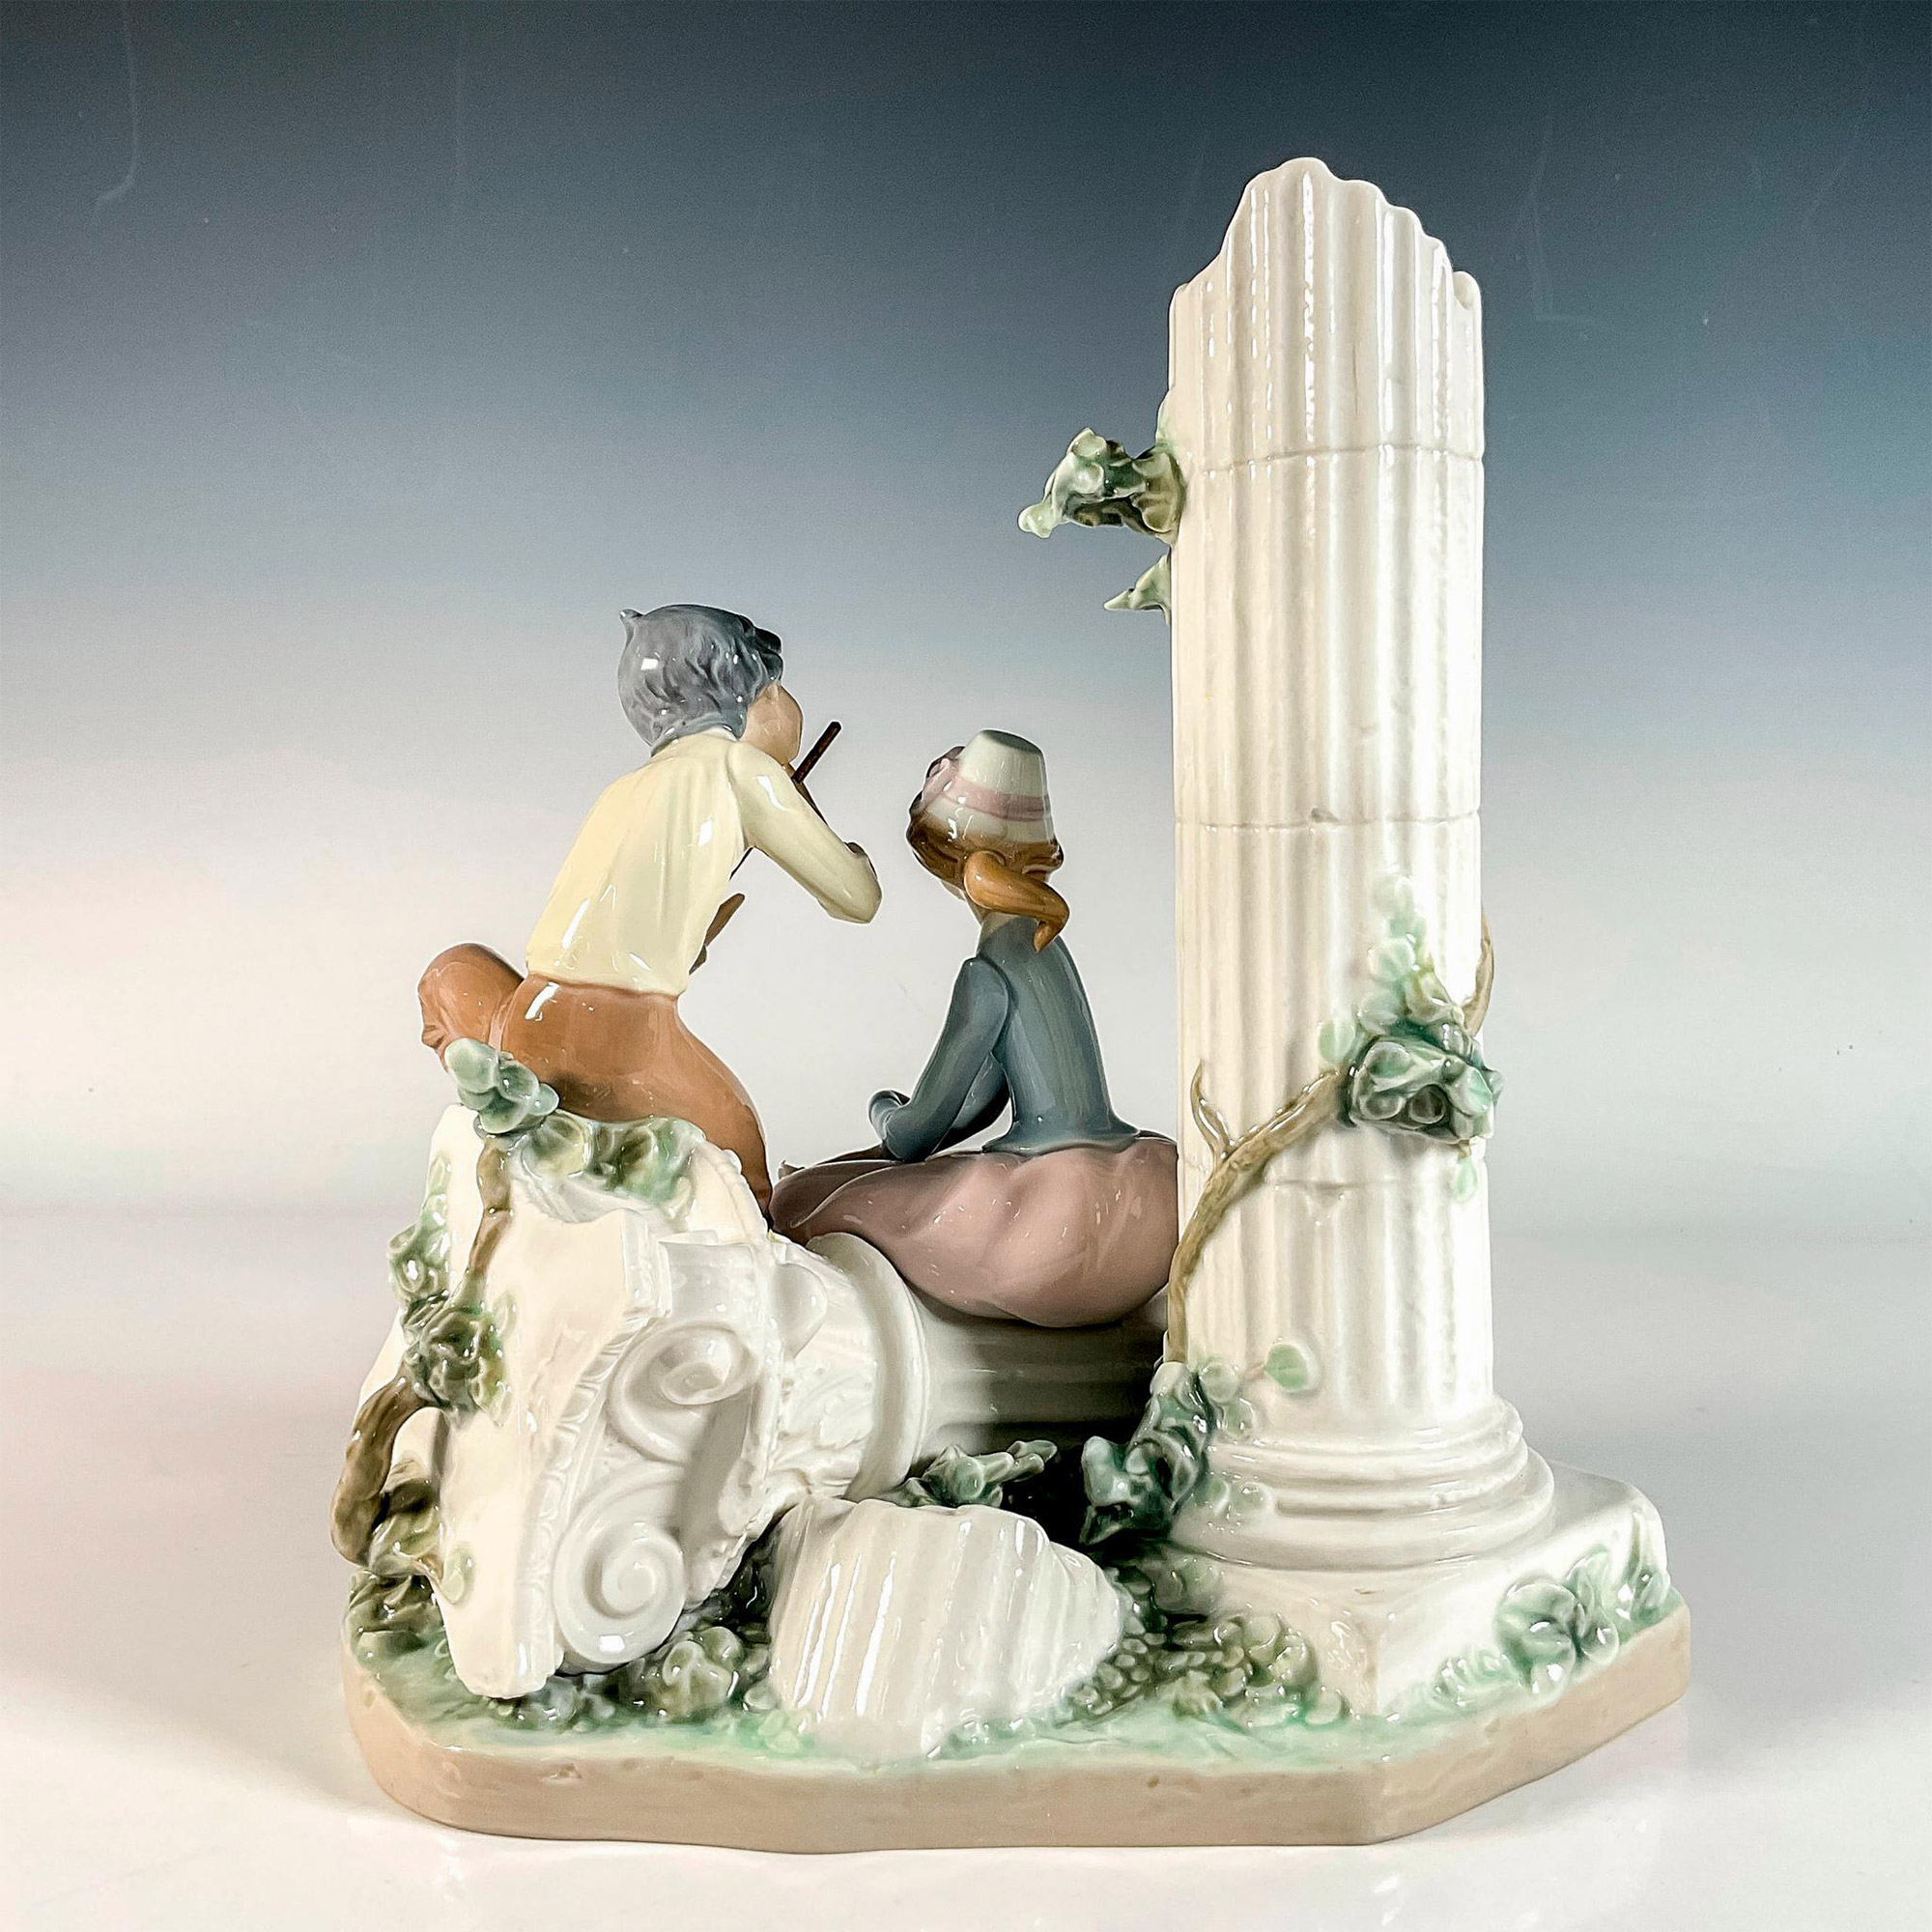 Lovers Serenade - Lladro Porcelain Figurine - Image 2 of 3